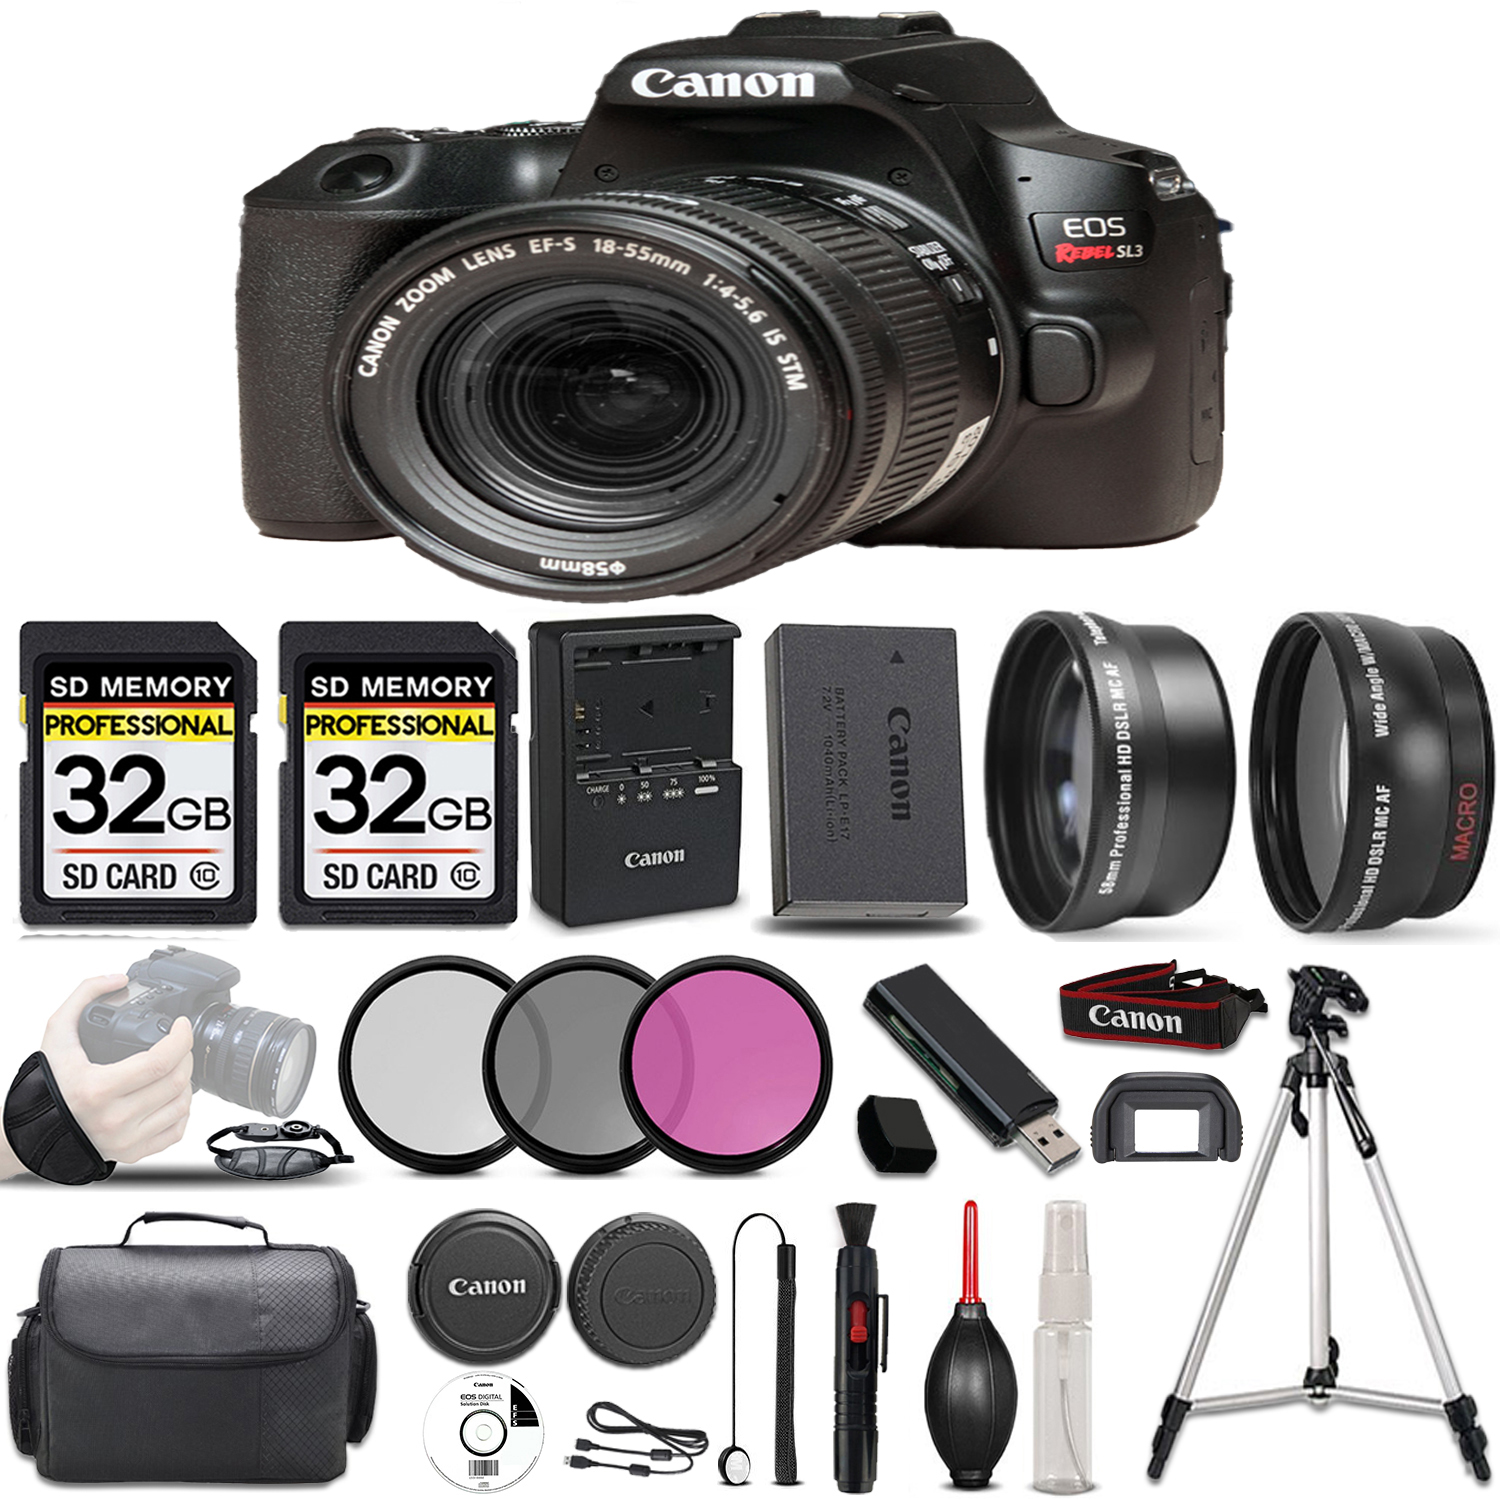 EOS Rebel SL3 DSLR Camera(Black) + 18-55mm STM Lens + 64GB - Accessory Kit *FREE SHIPPING*